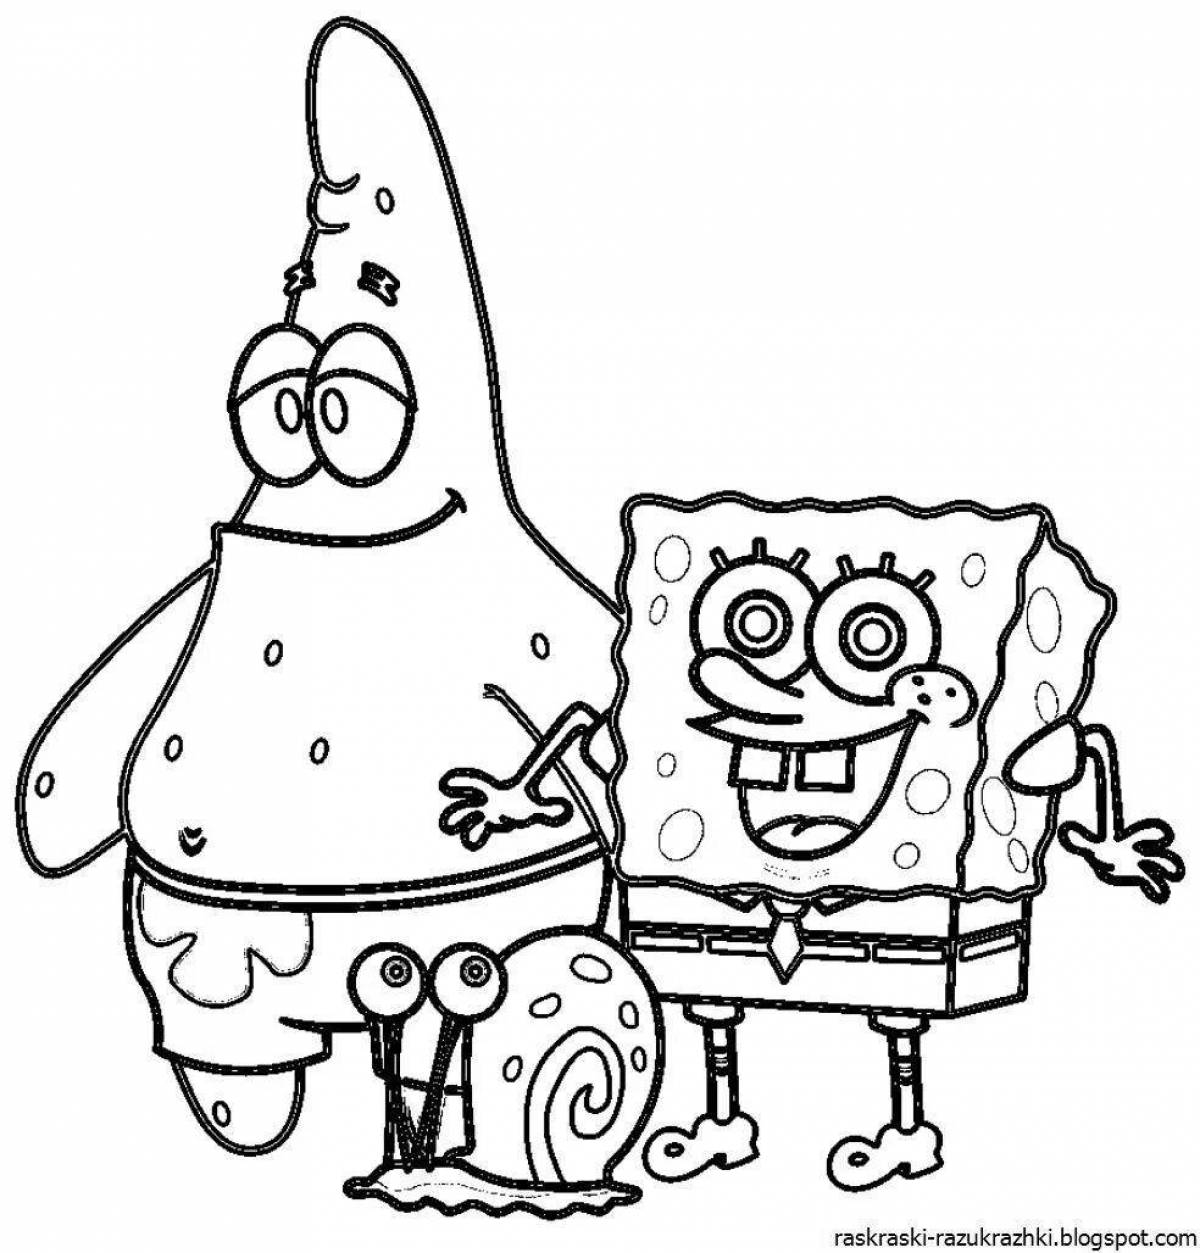 Spongebob and patrick's jubilant coloring book